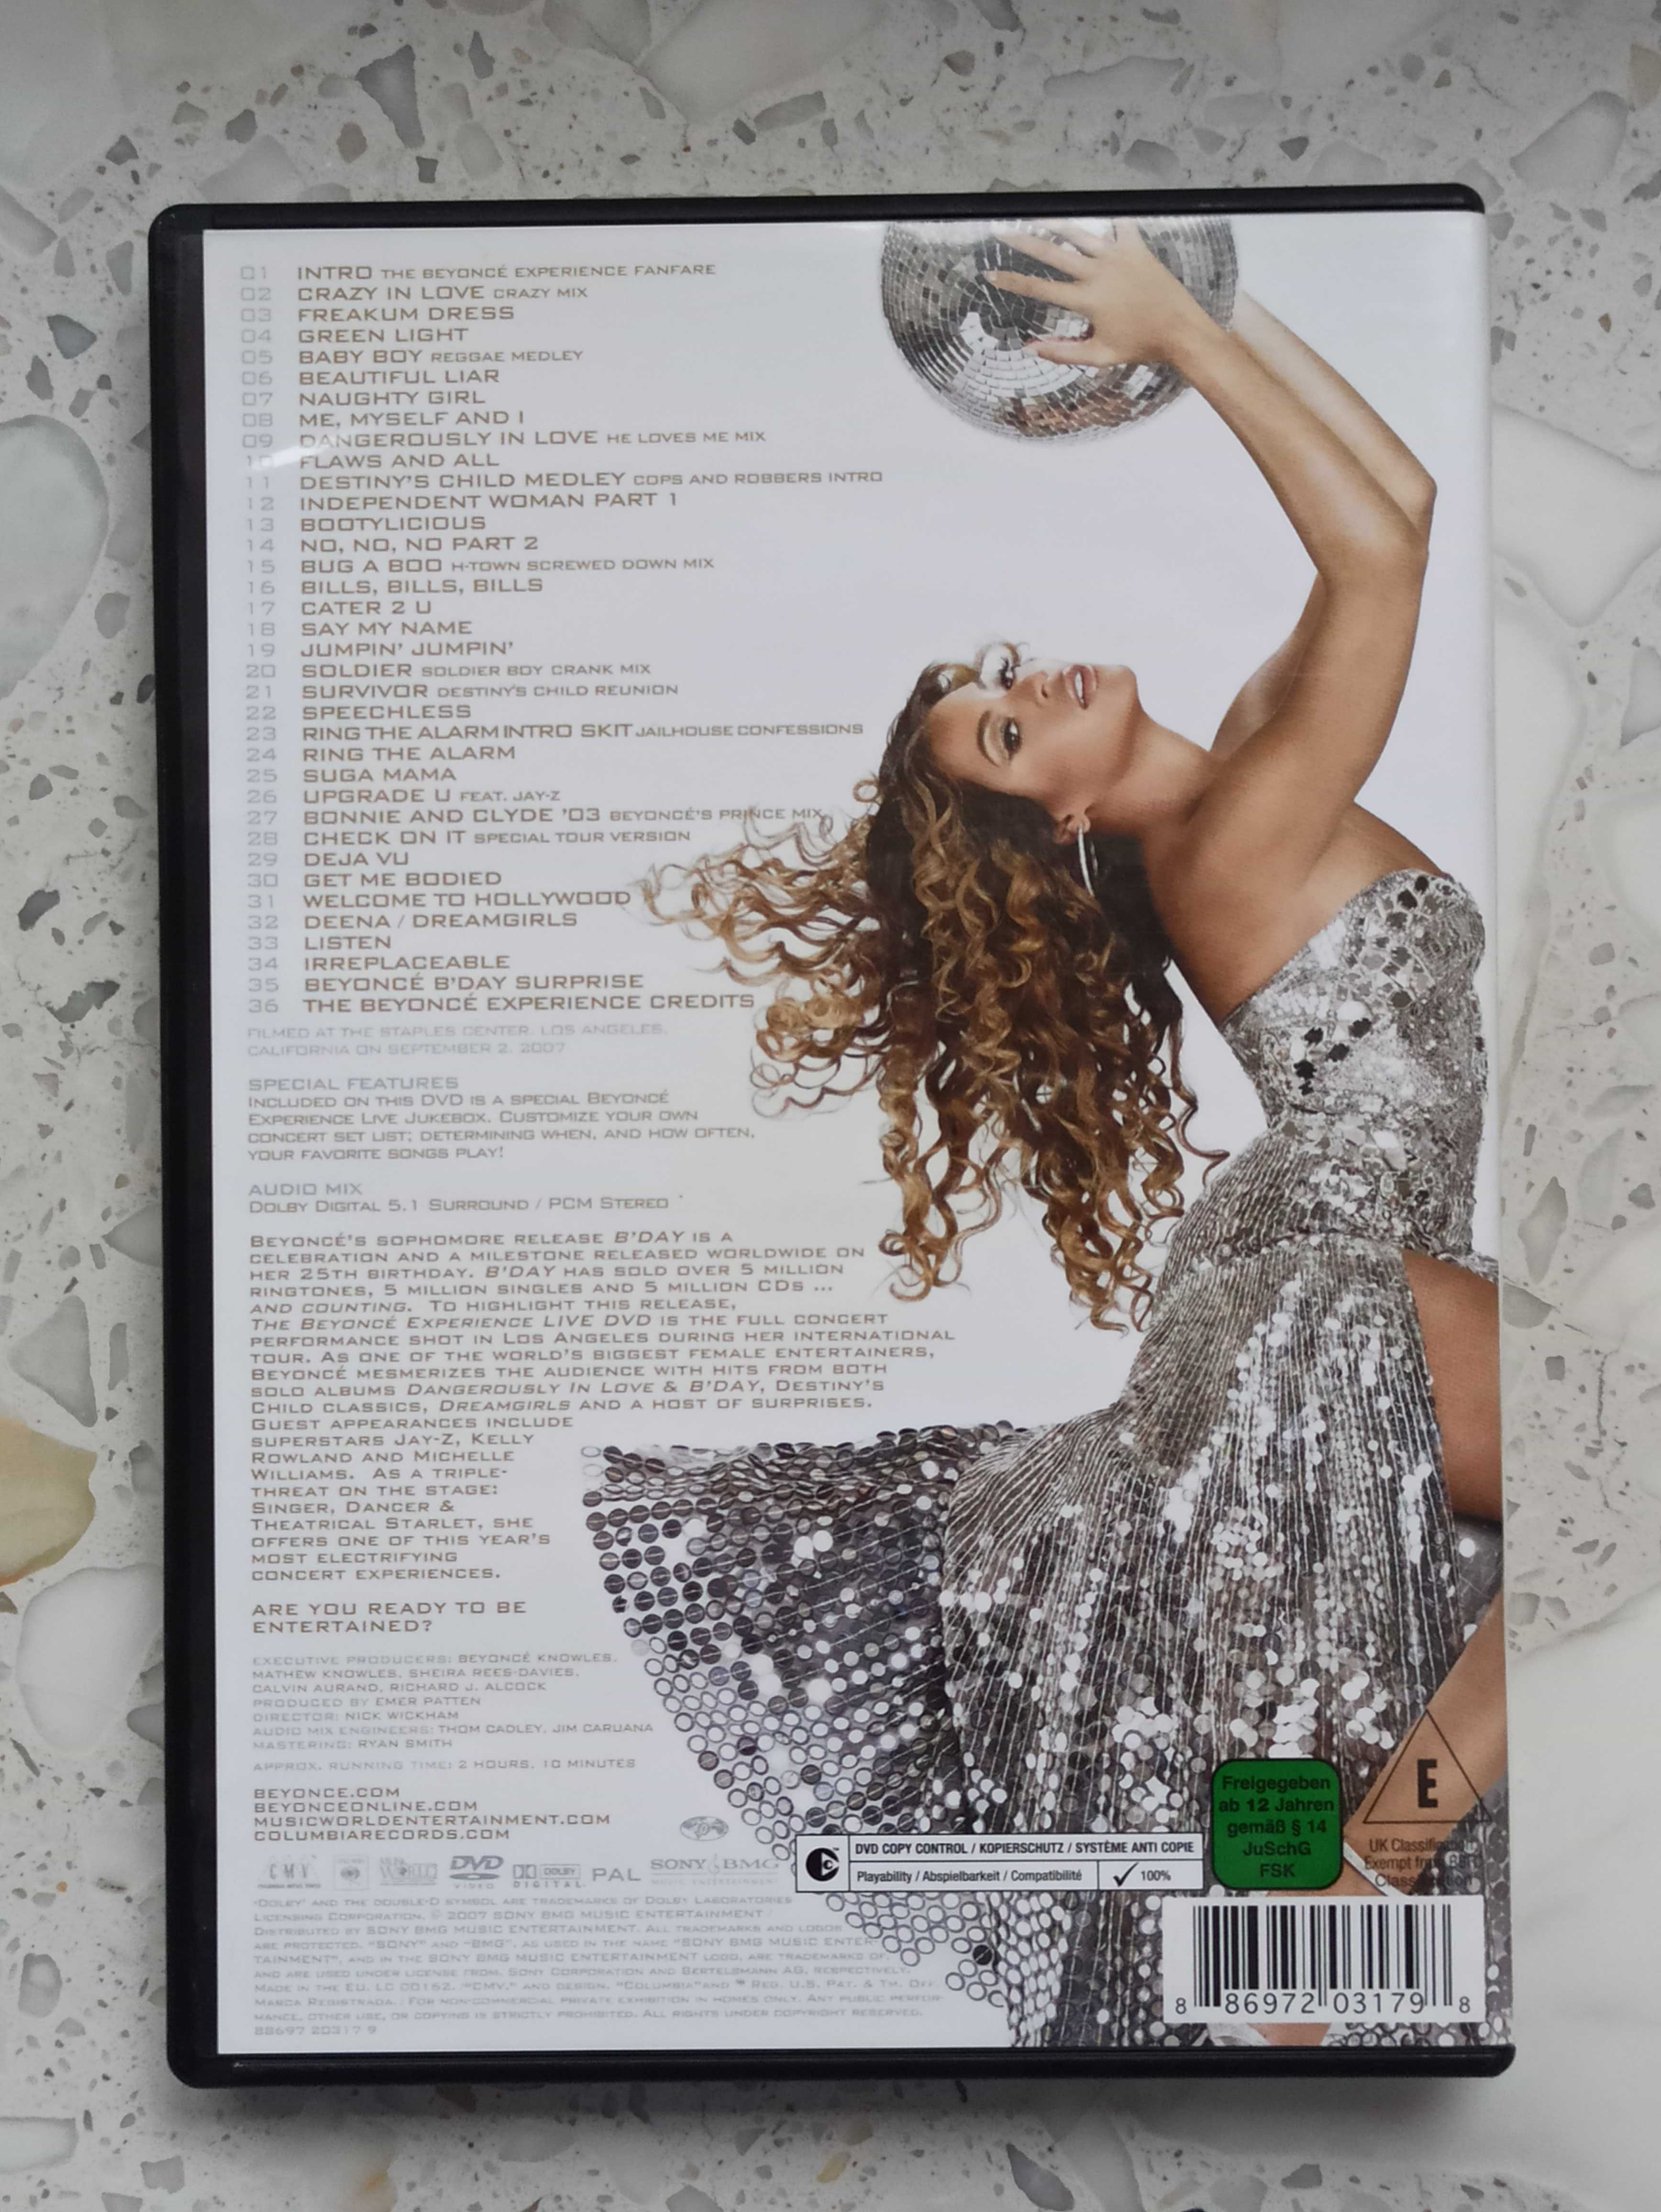 BEYONCE "The Beyoncé Experience LIVE" (DVD) Los Angeles 2007